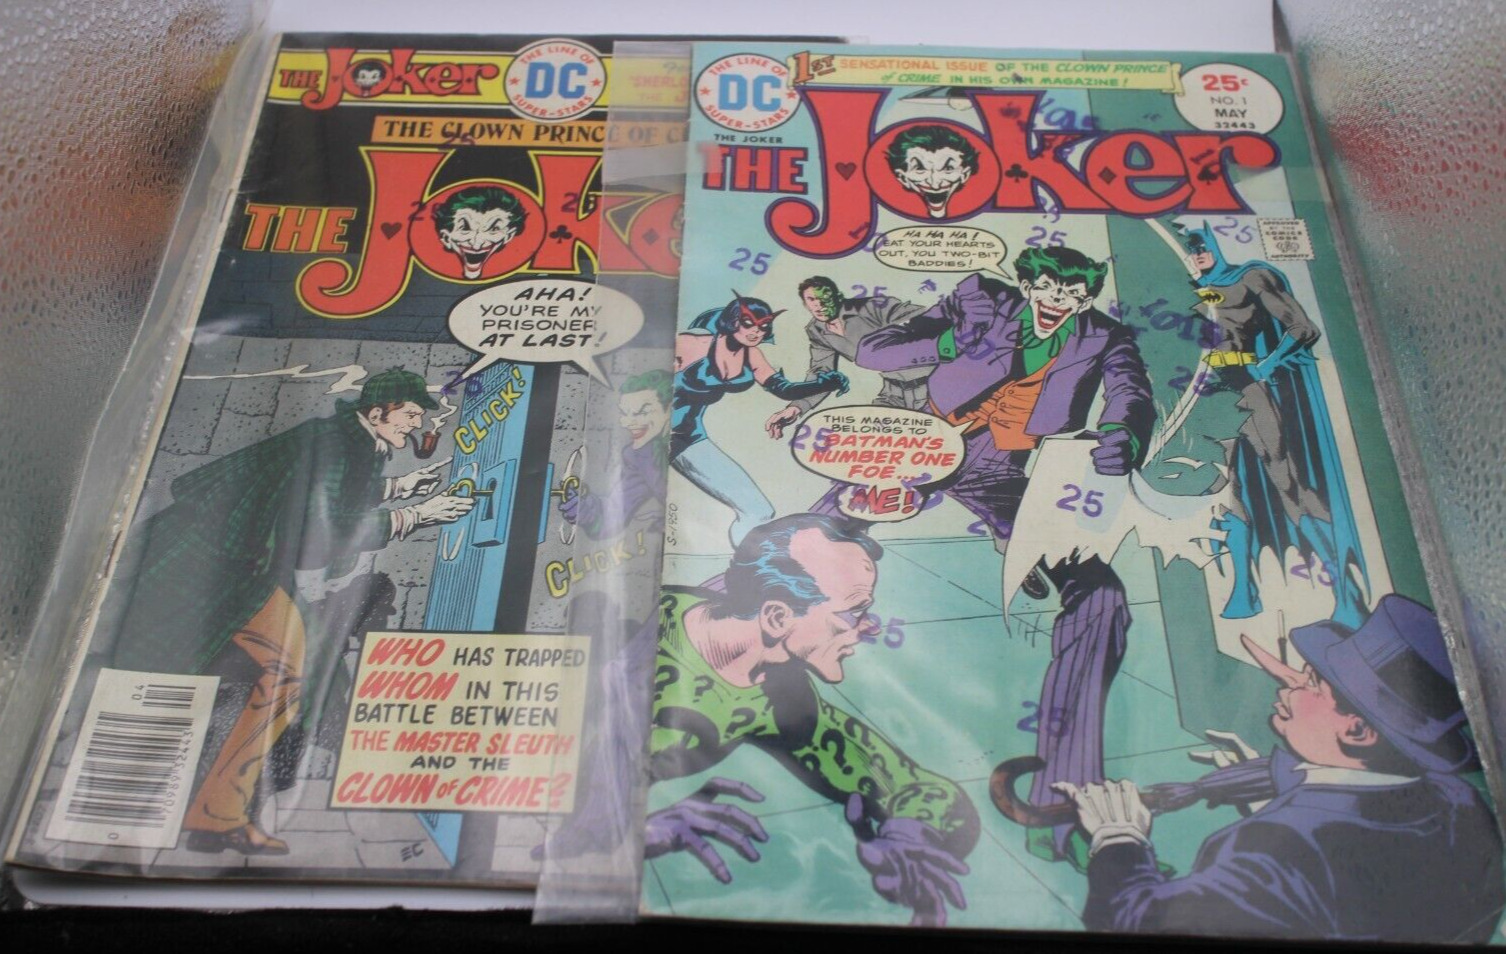 Joker #1 + Joker #6 - DC Comics 1975 1st Solo Series Batman, SHIP TODAY